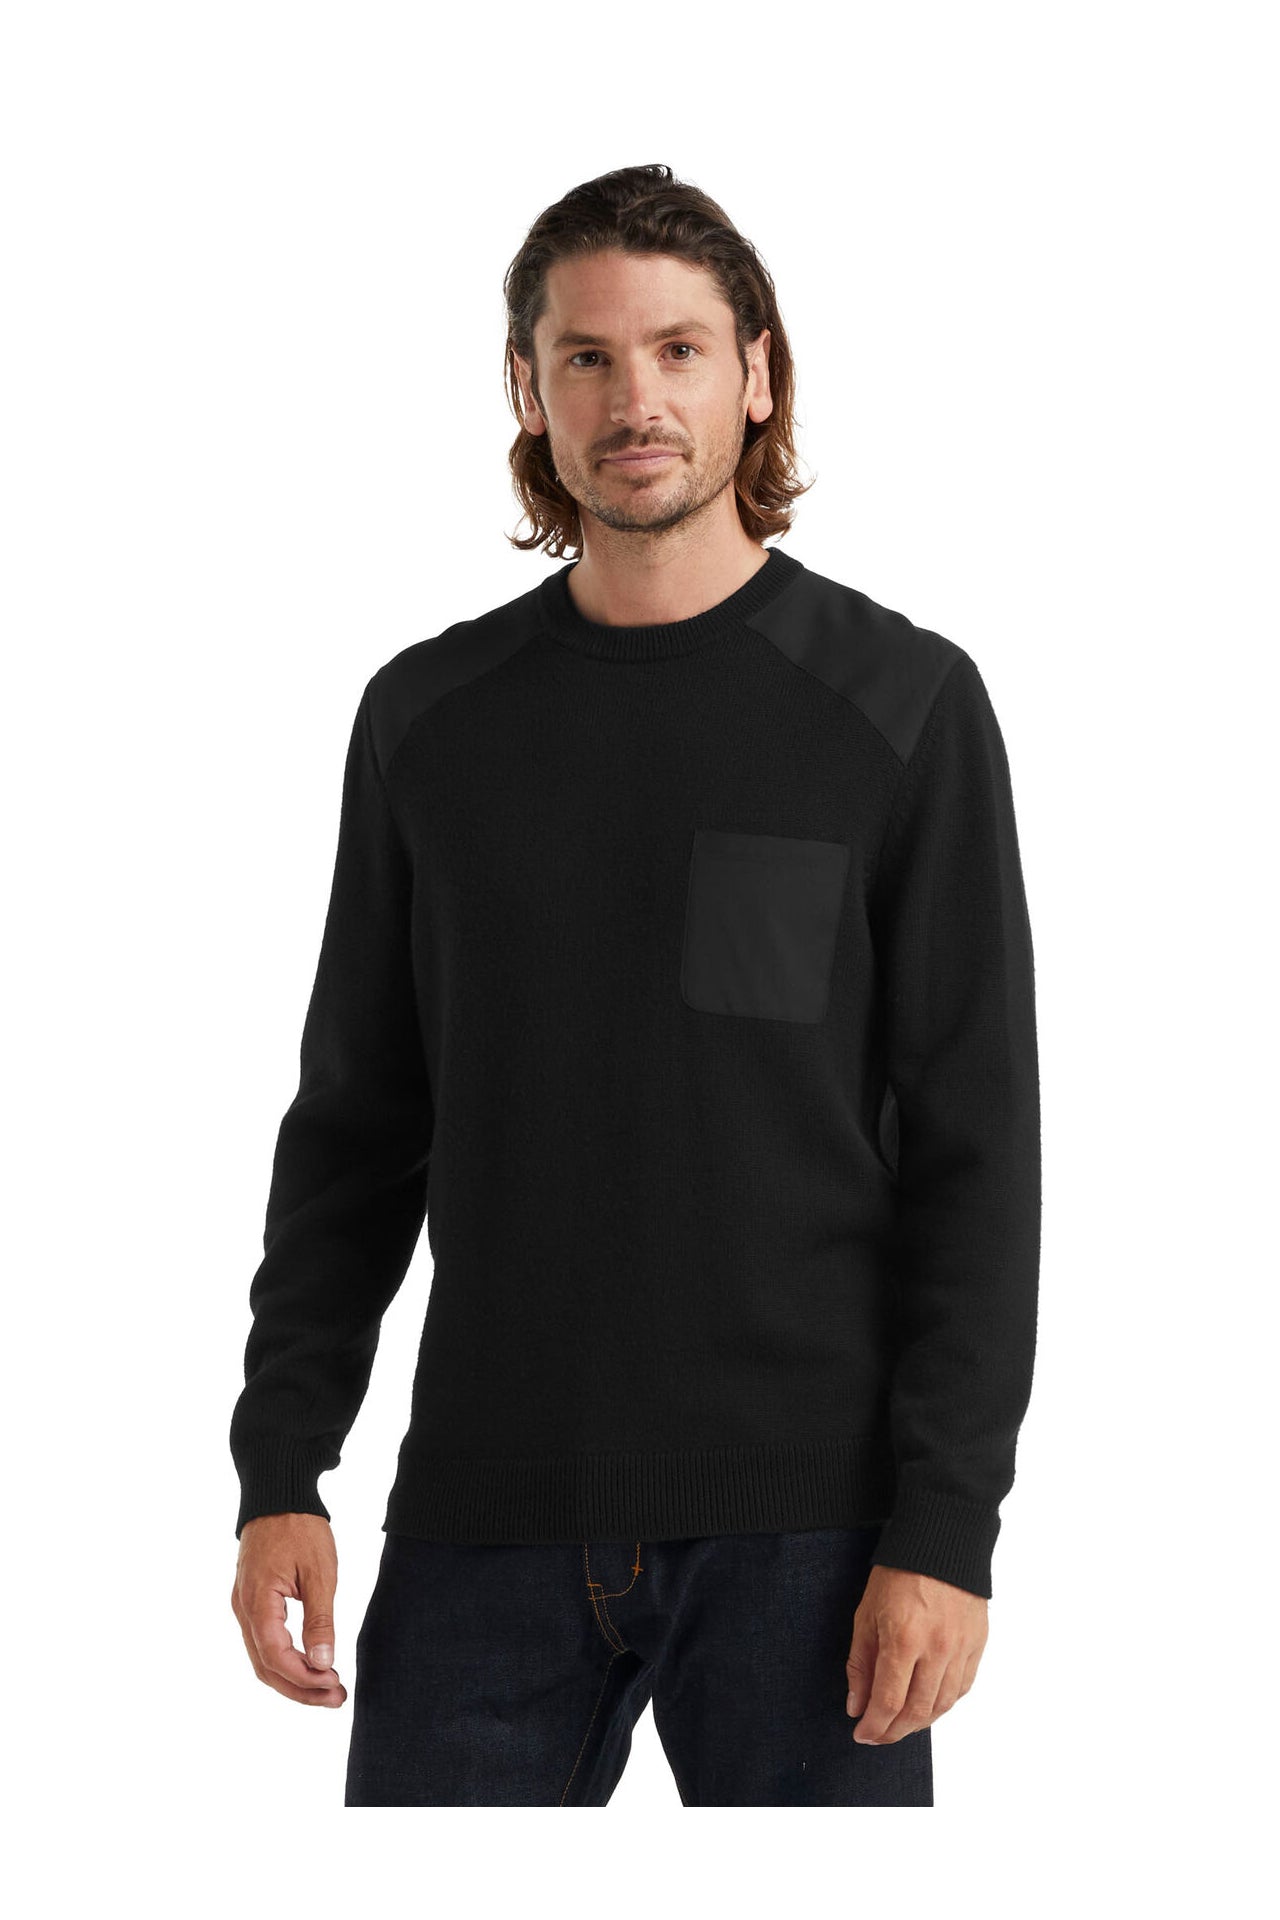 Icebreaker Men's Barein Crewe Sweater Black